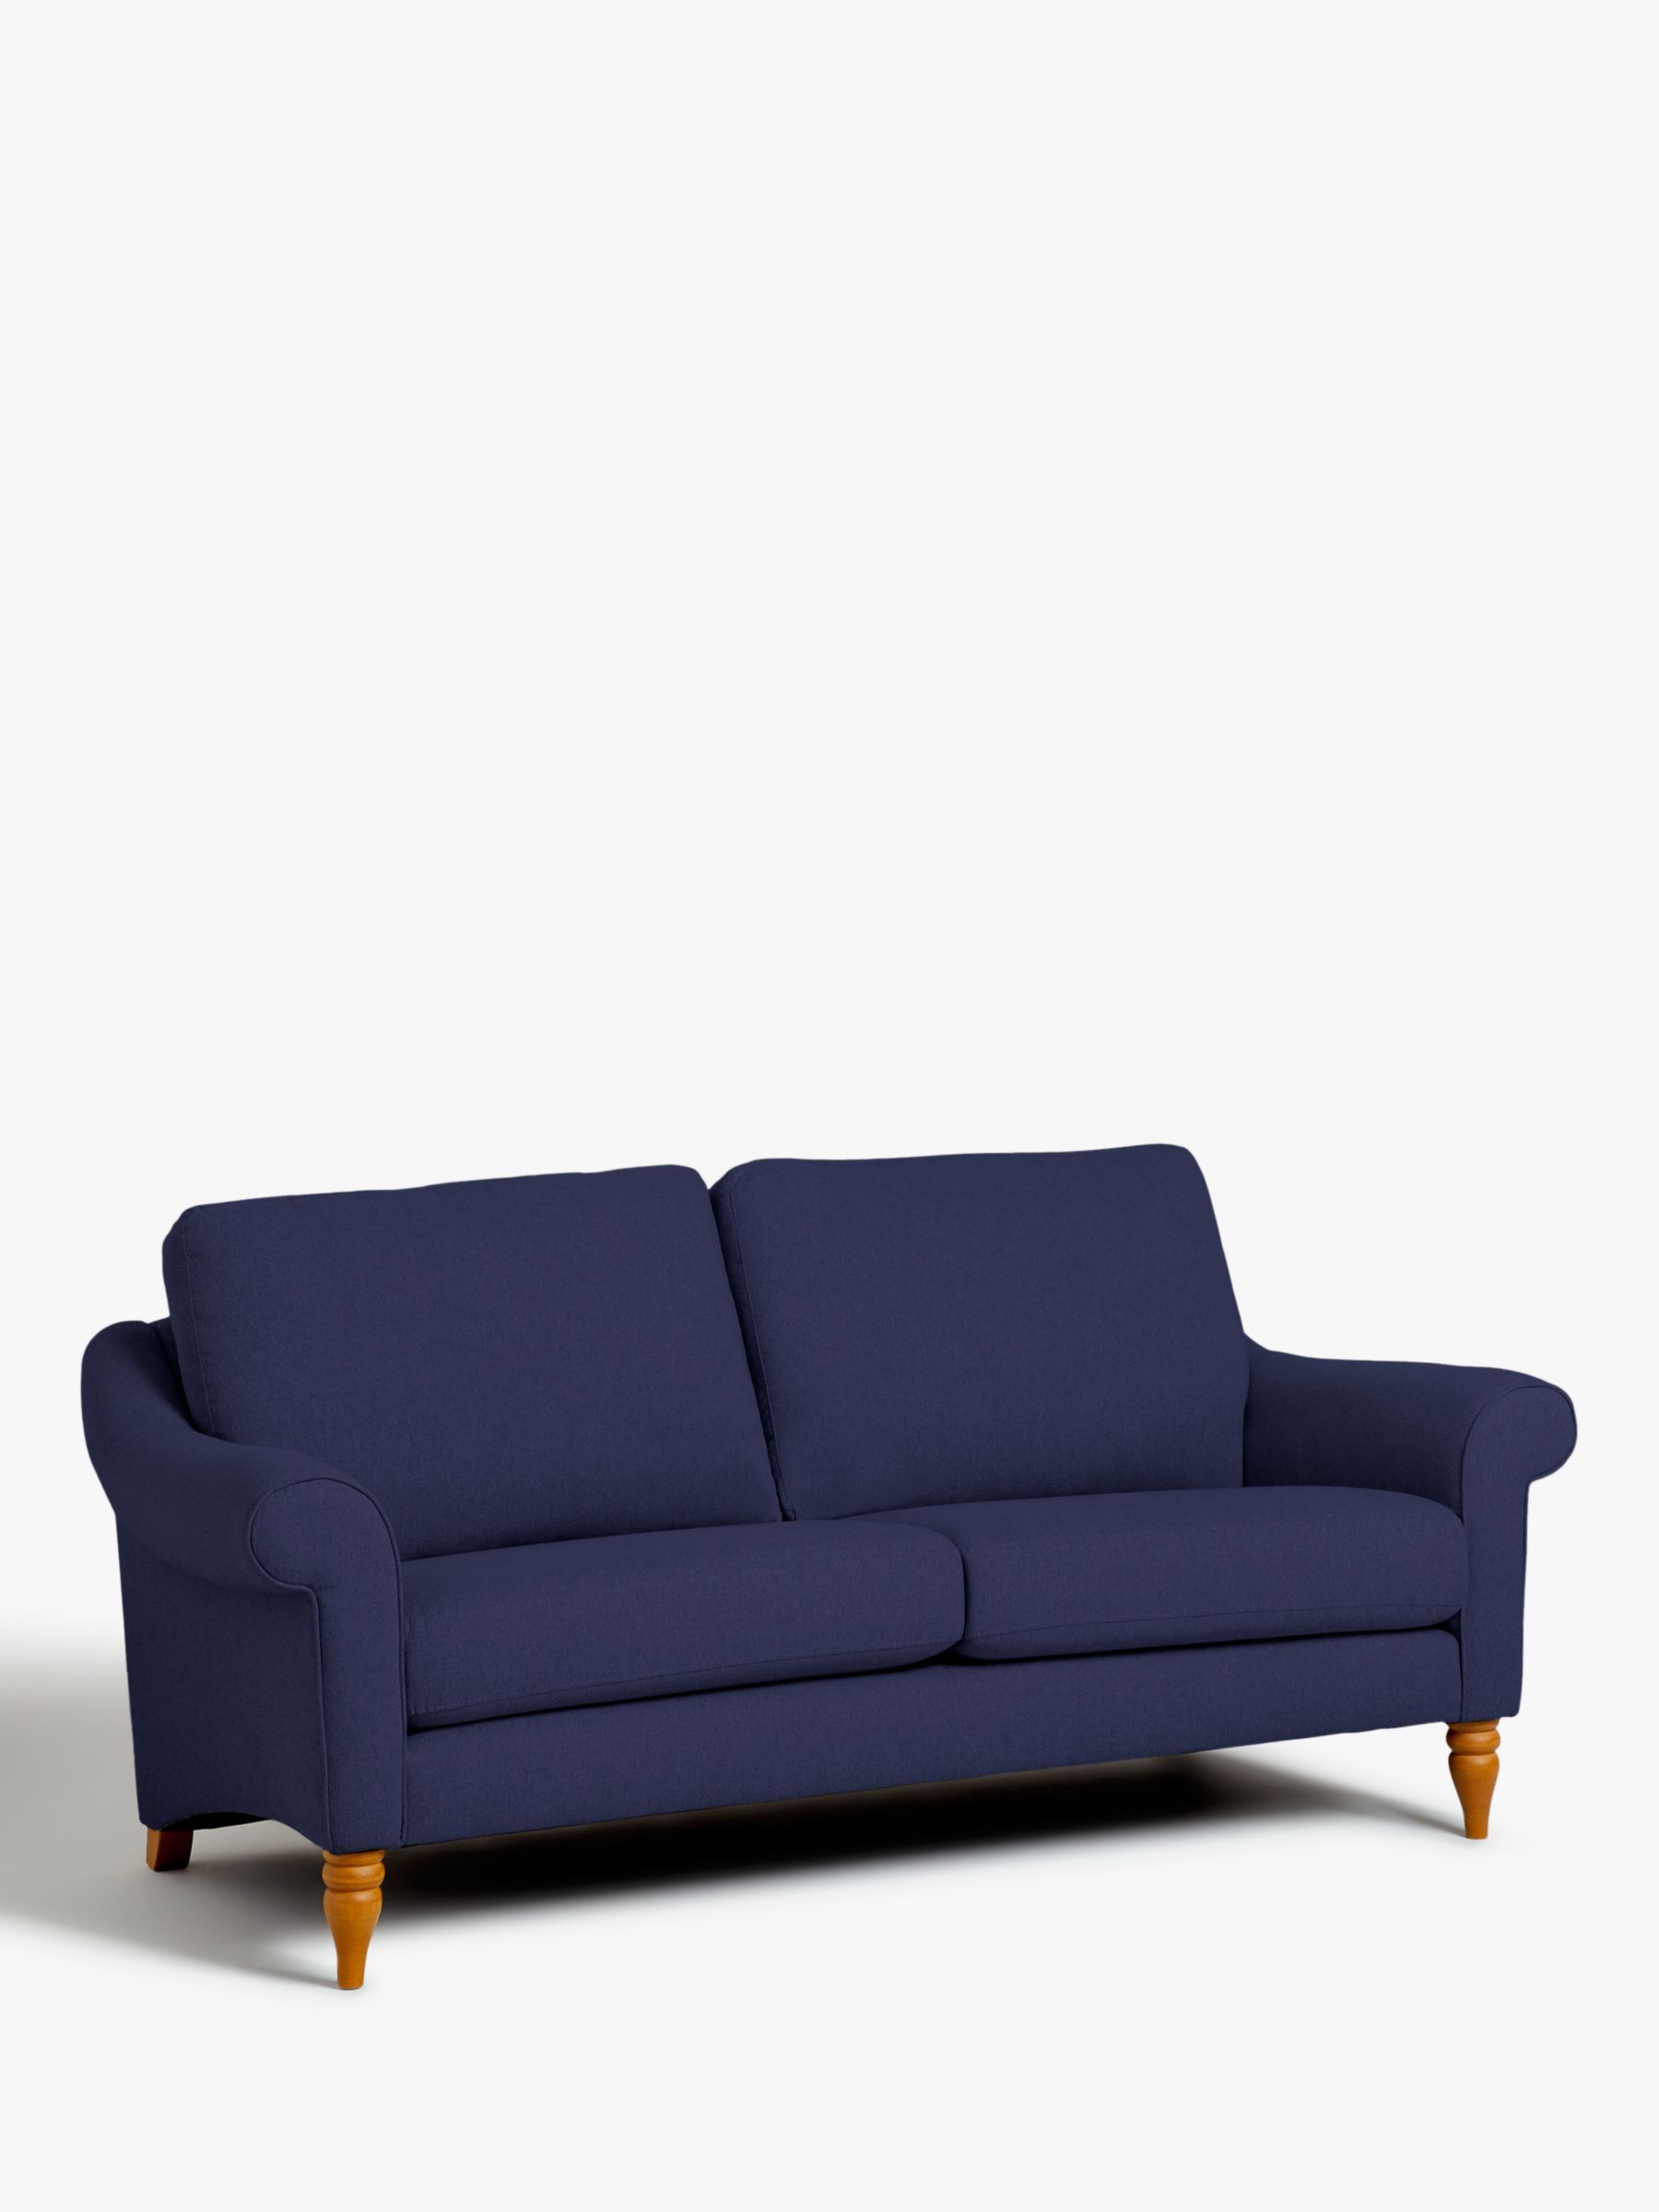 Camber Range, John Lewis Camber Medium 2 Seater Sofa, Light Leg, Easy Clean Recycled Brushed Cotton Navy